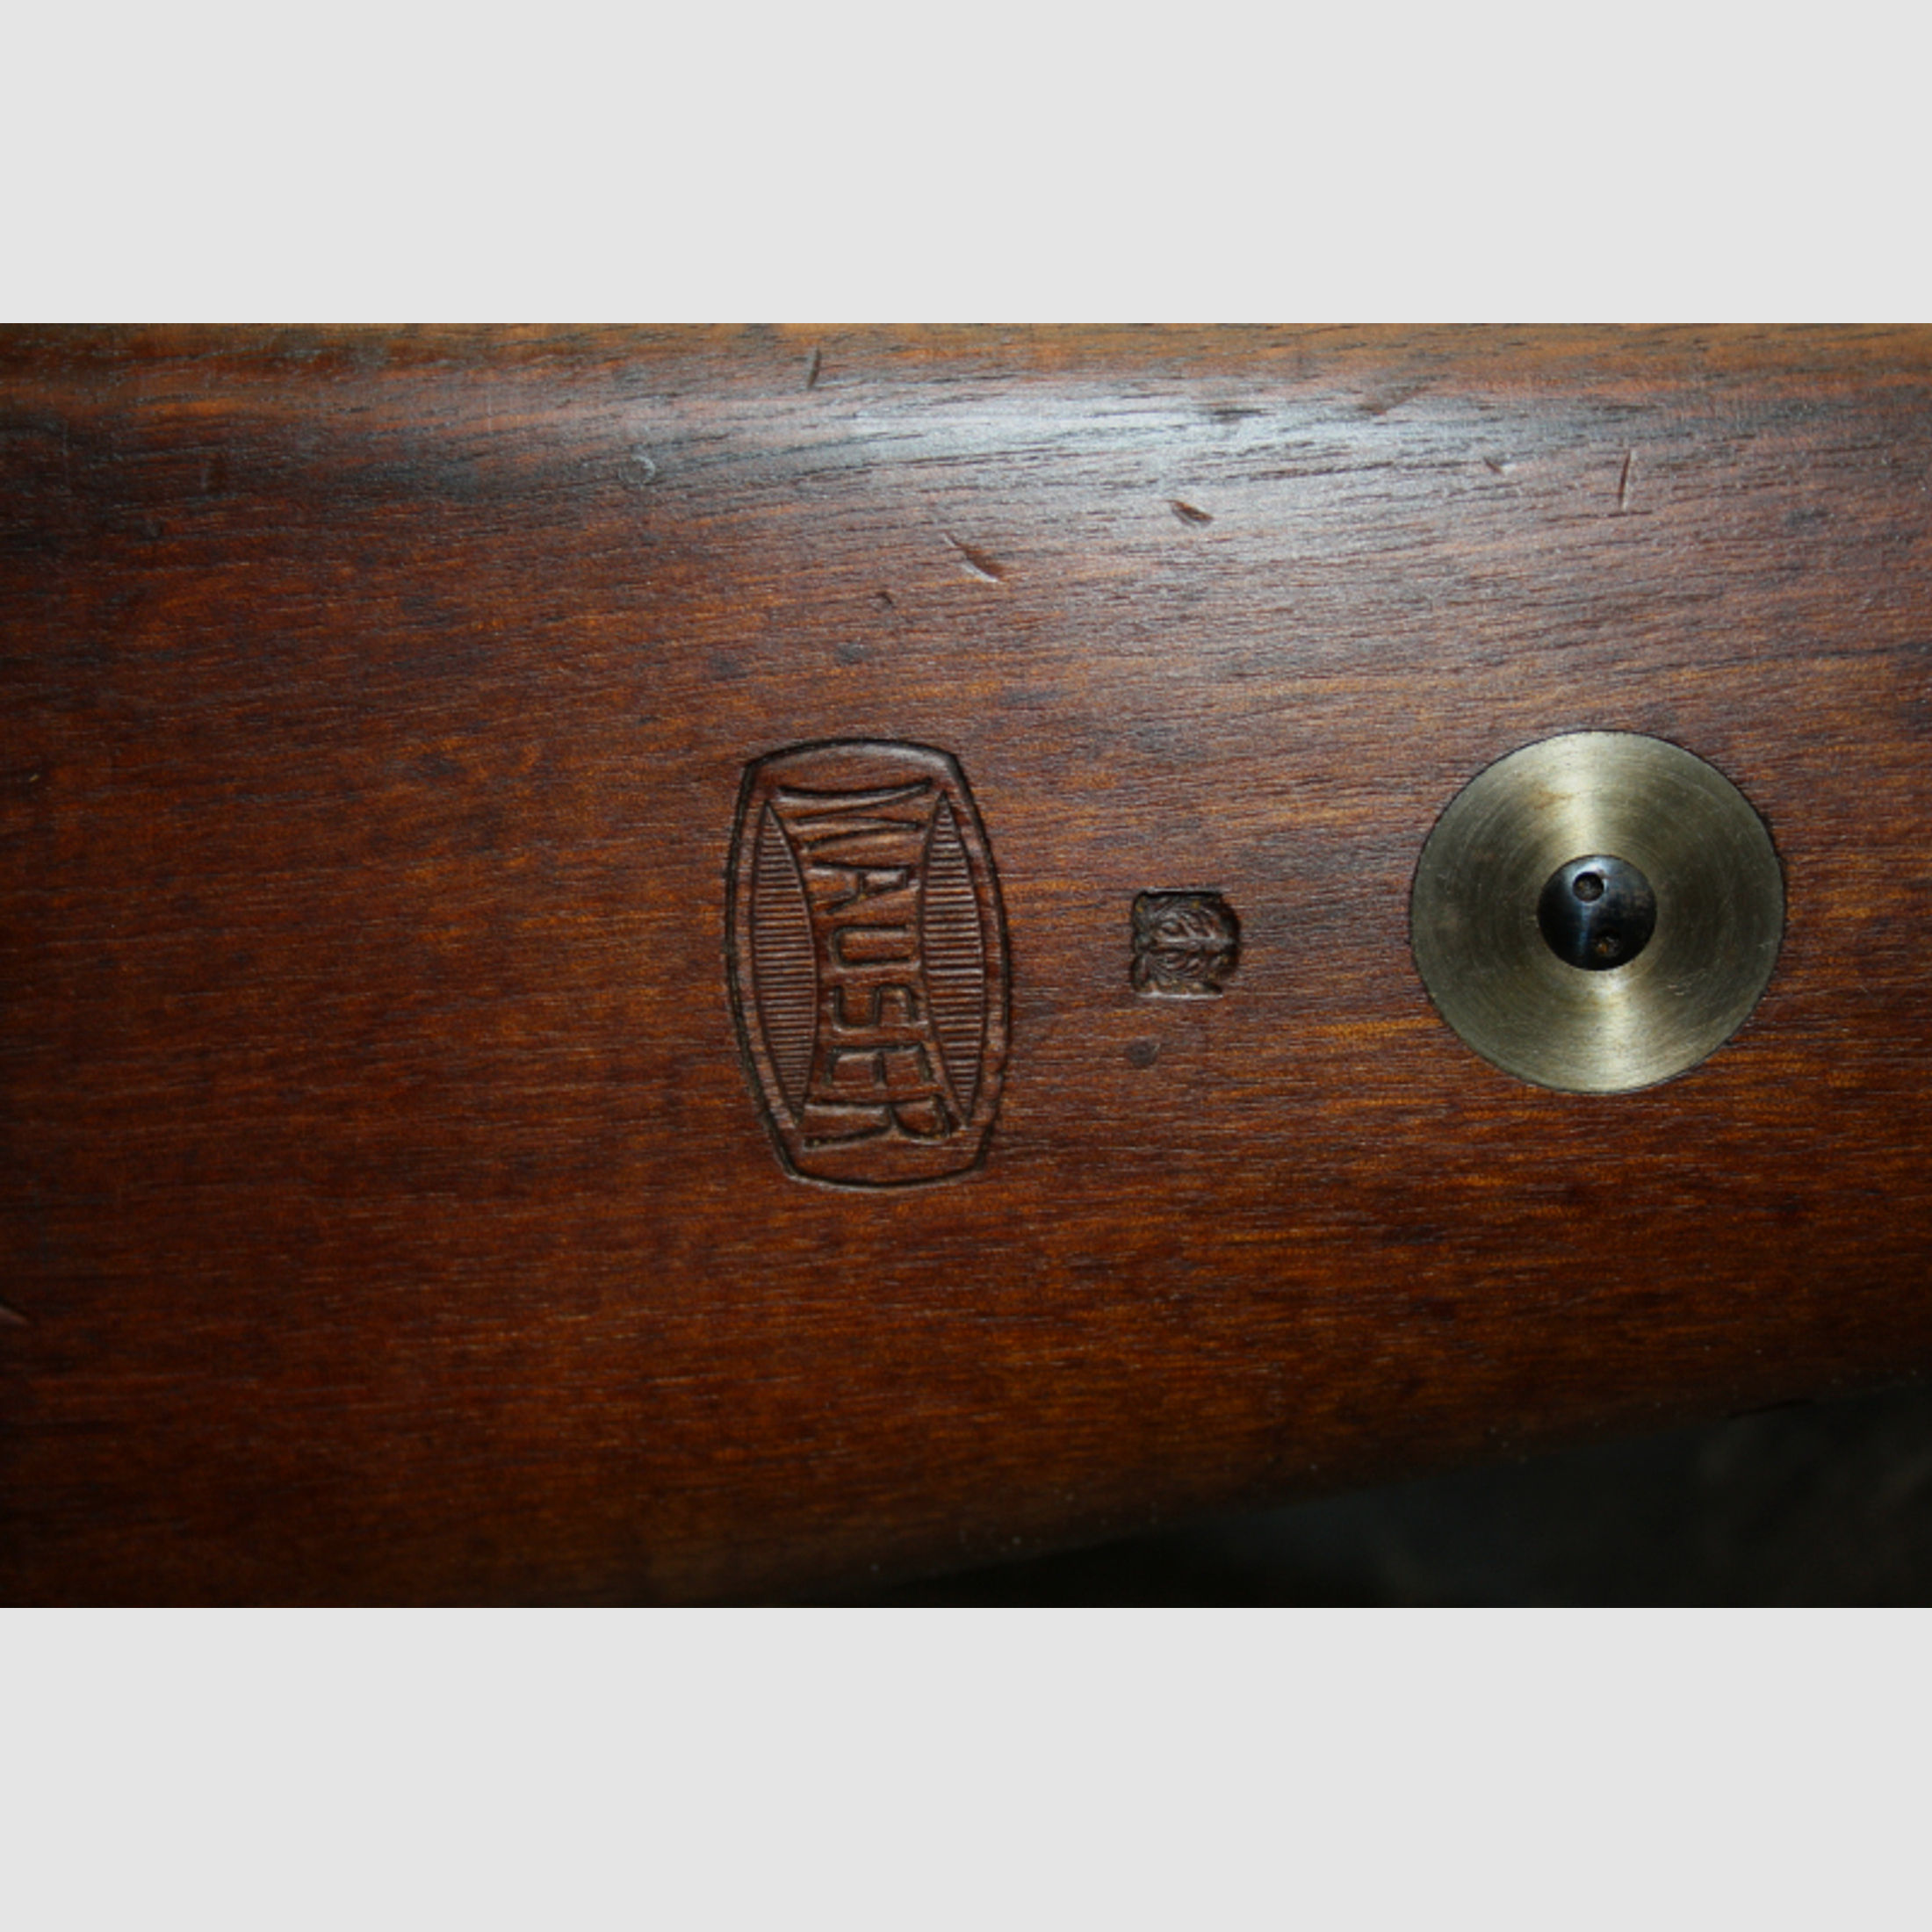 Original Mauser Republica del Peru 7,65 Arg. nrgl. Exellenter Zustand #17339